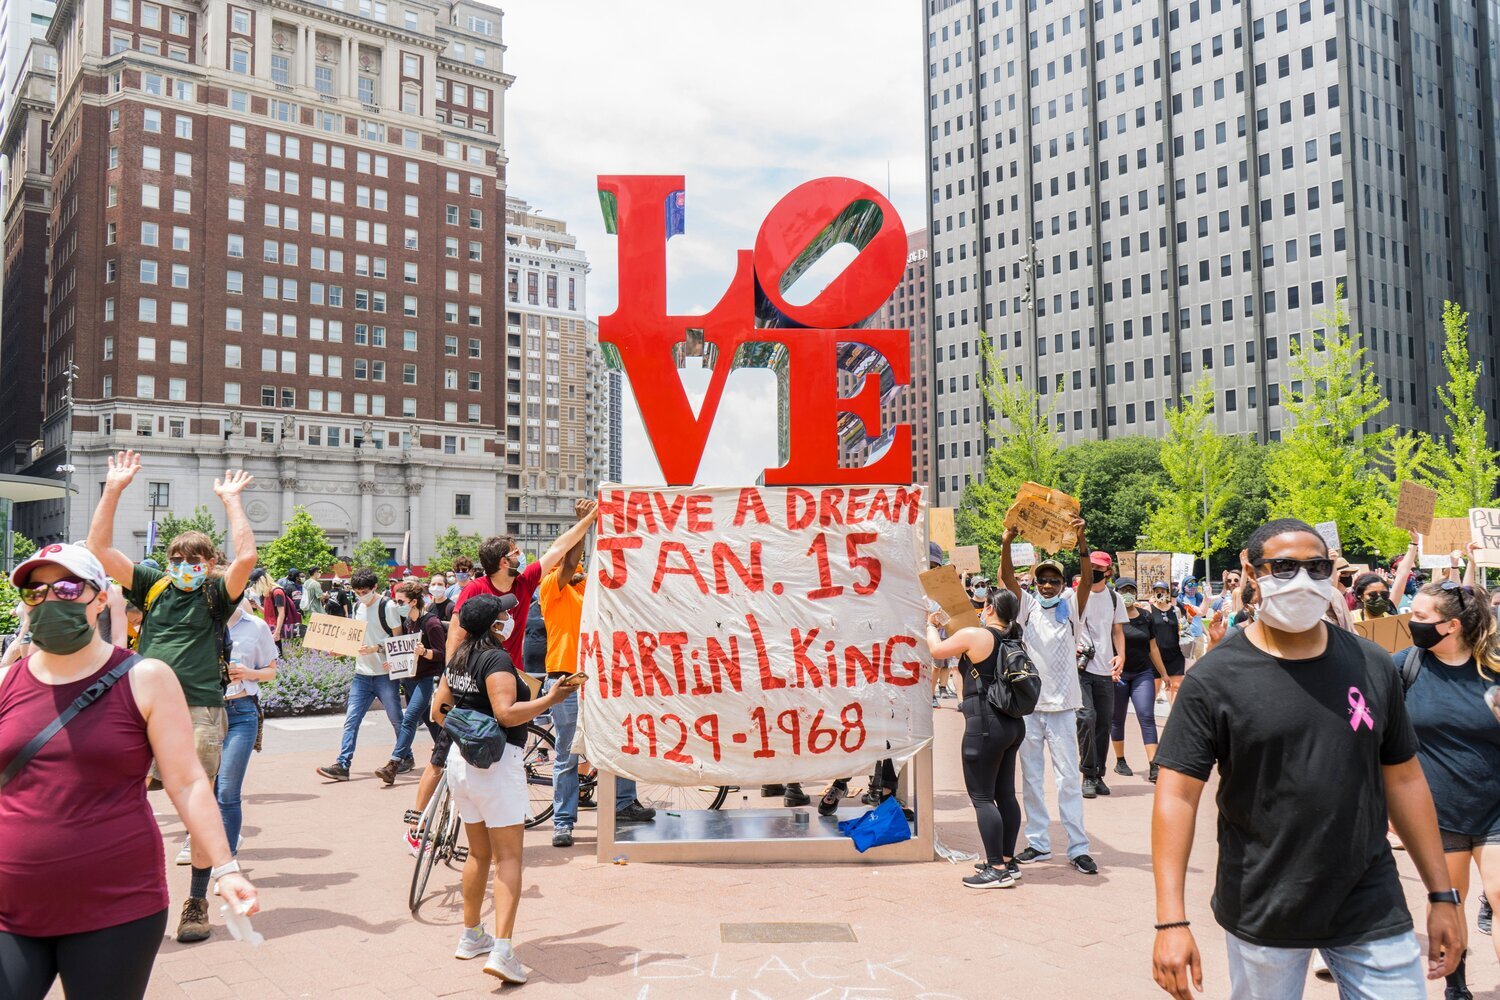 Black Lives Matter protesters in Philadelphia, June 2020. Photography by Drew Dennis